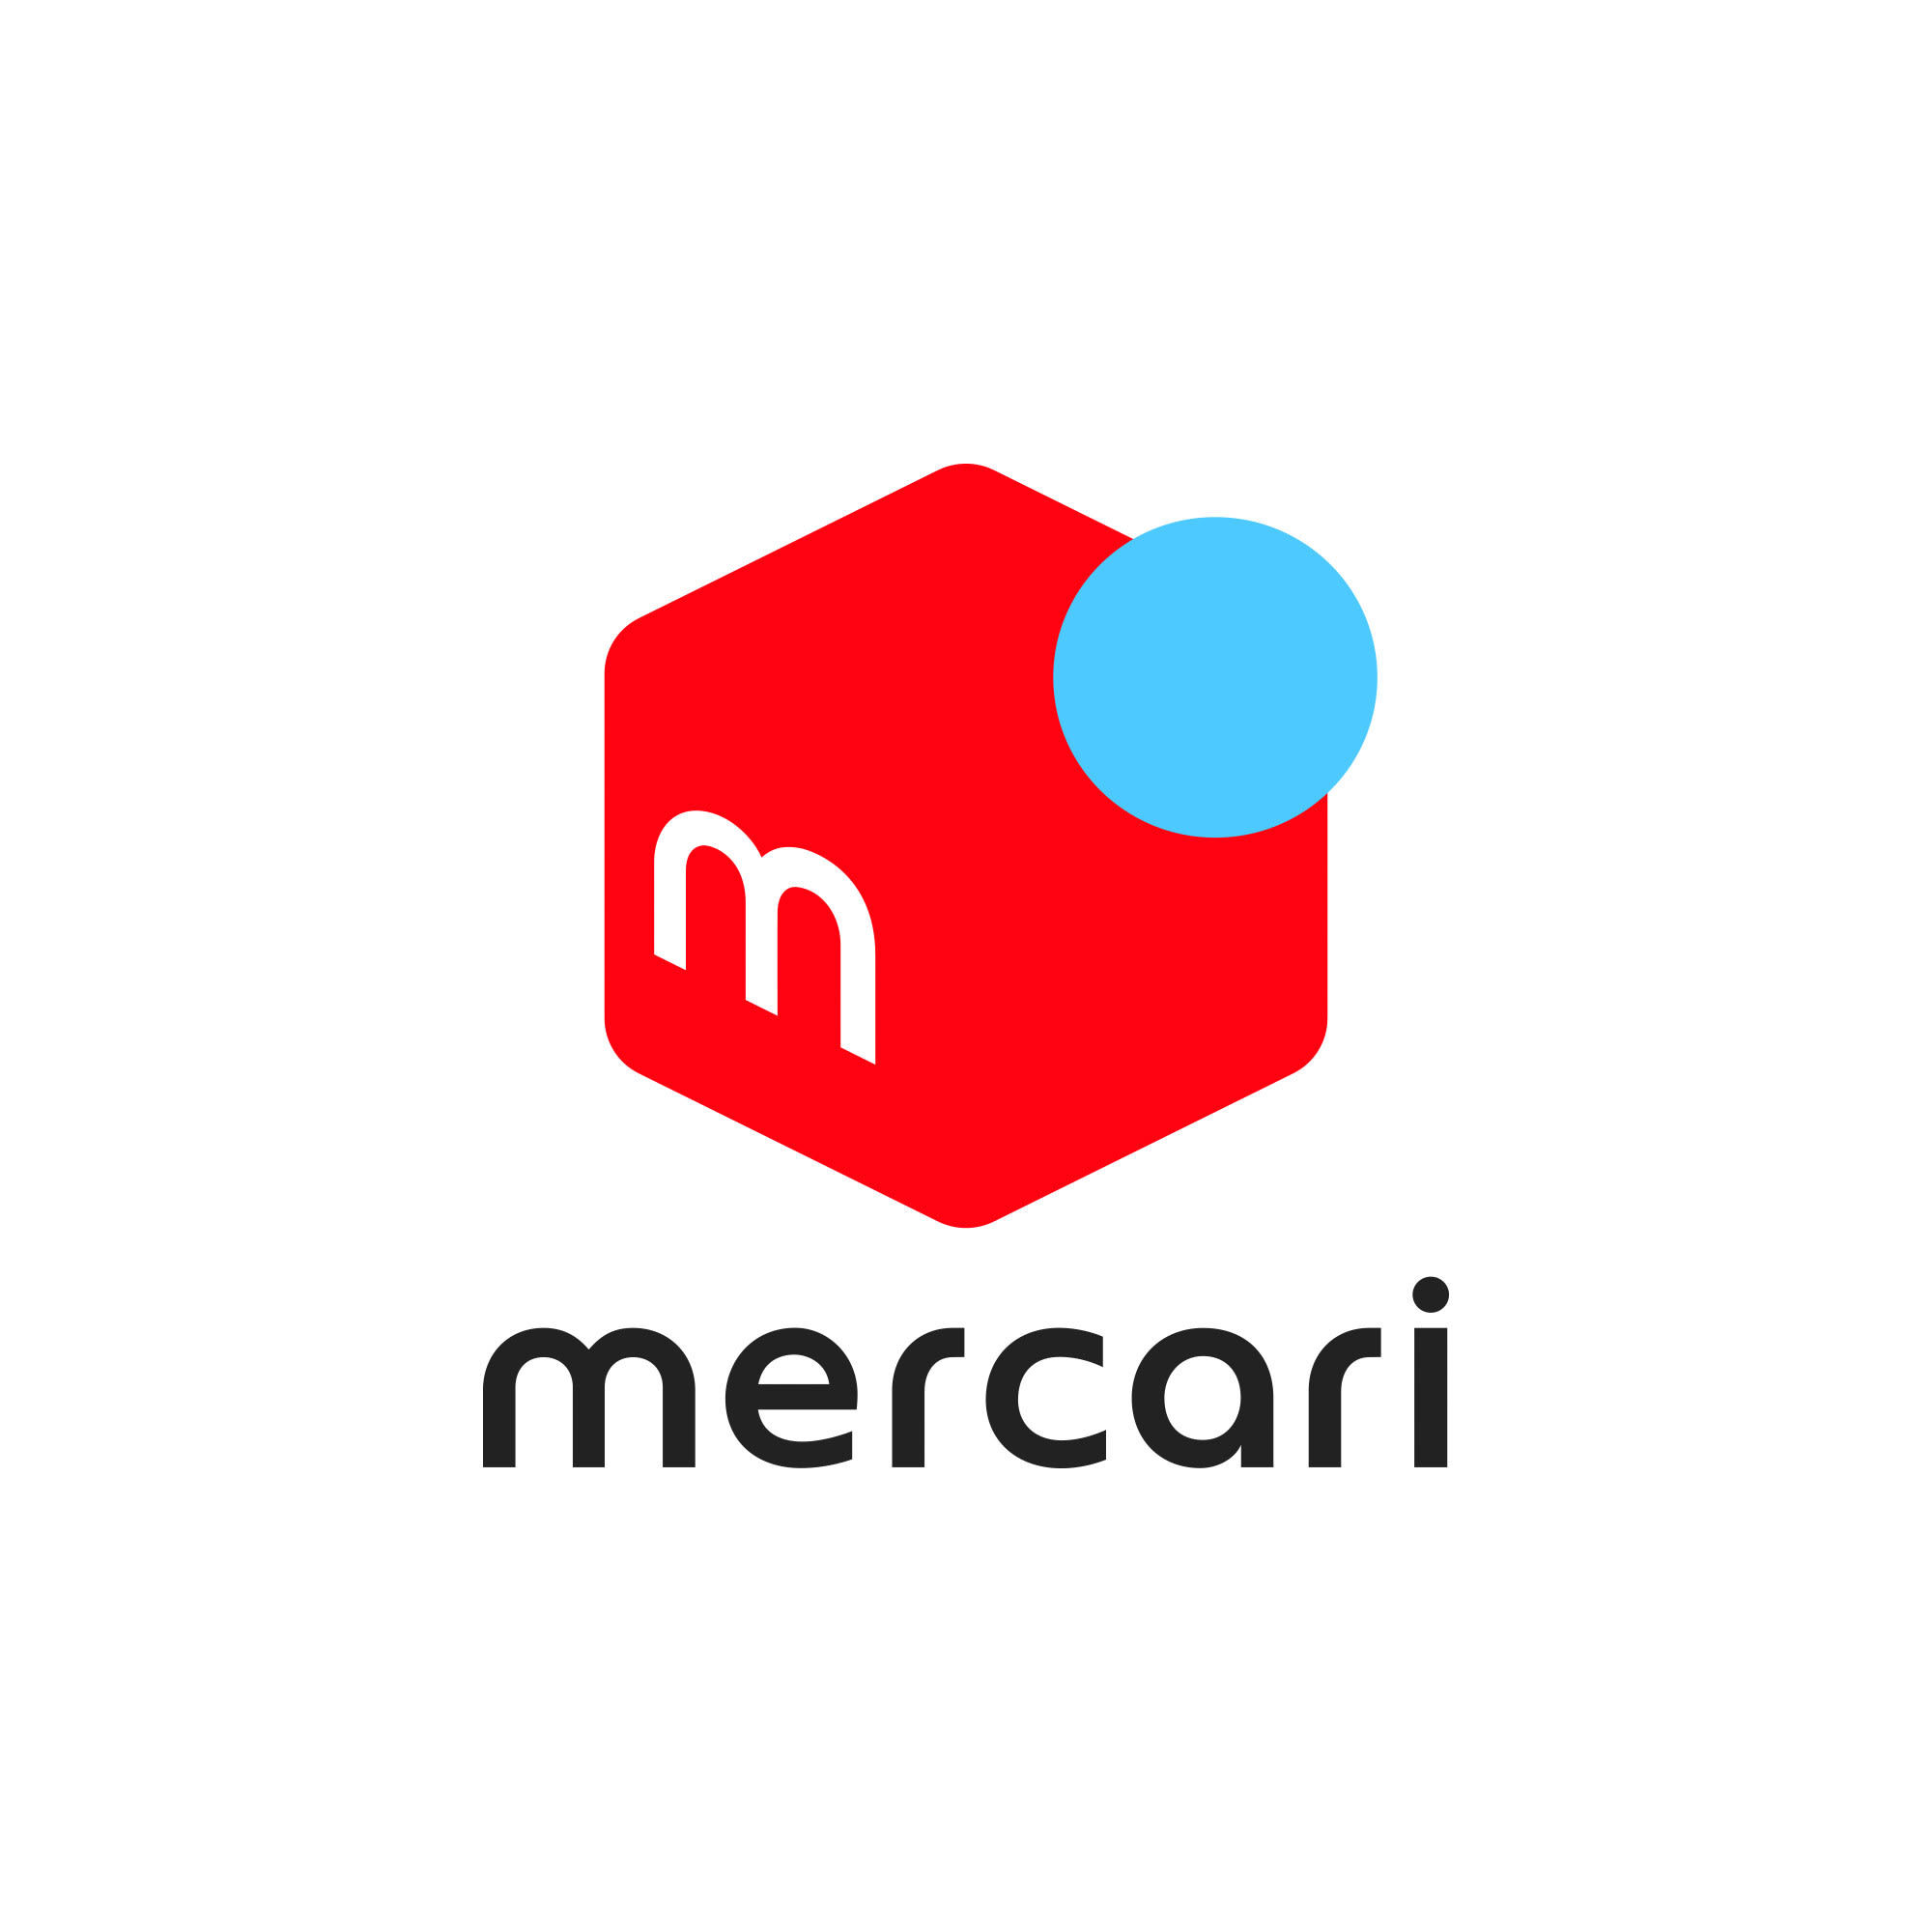 mercari-trillion-gmv-20181119-001